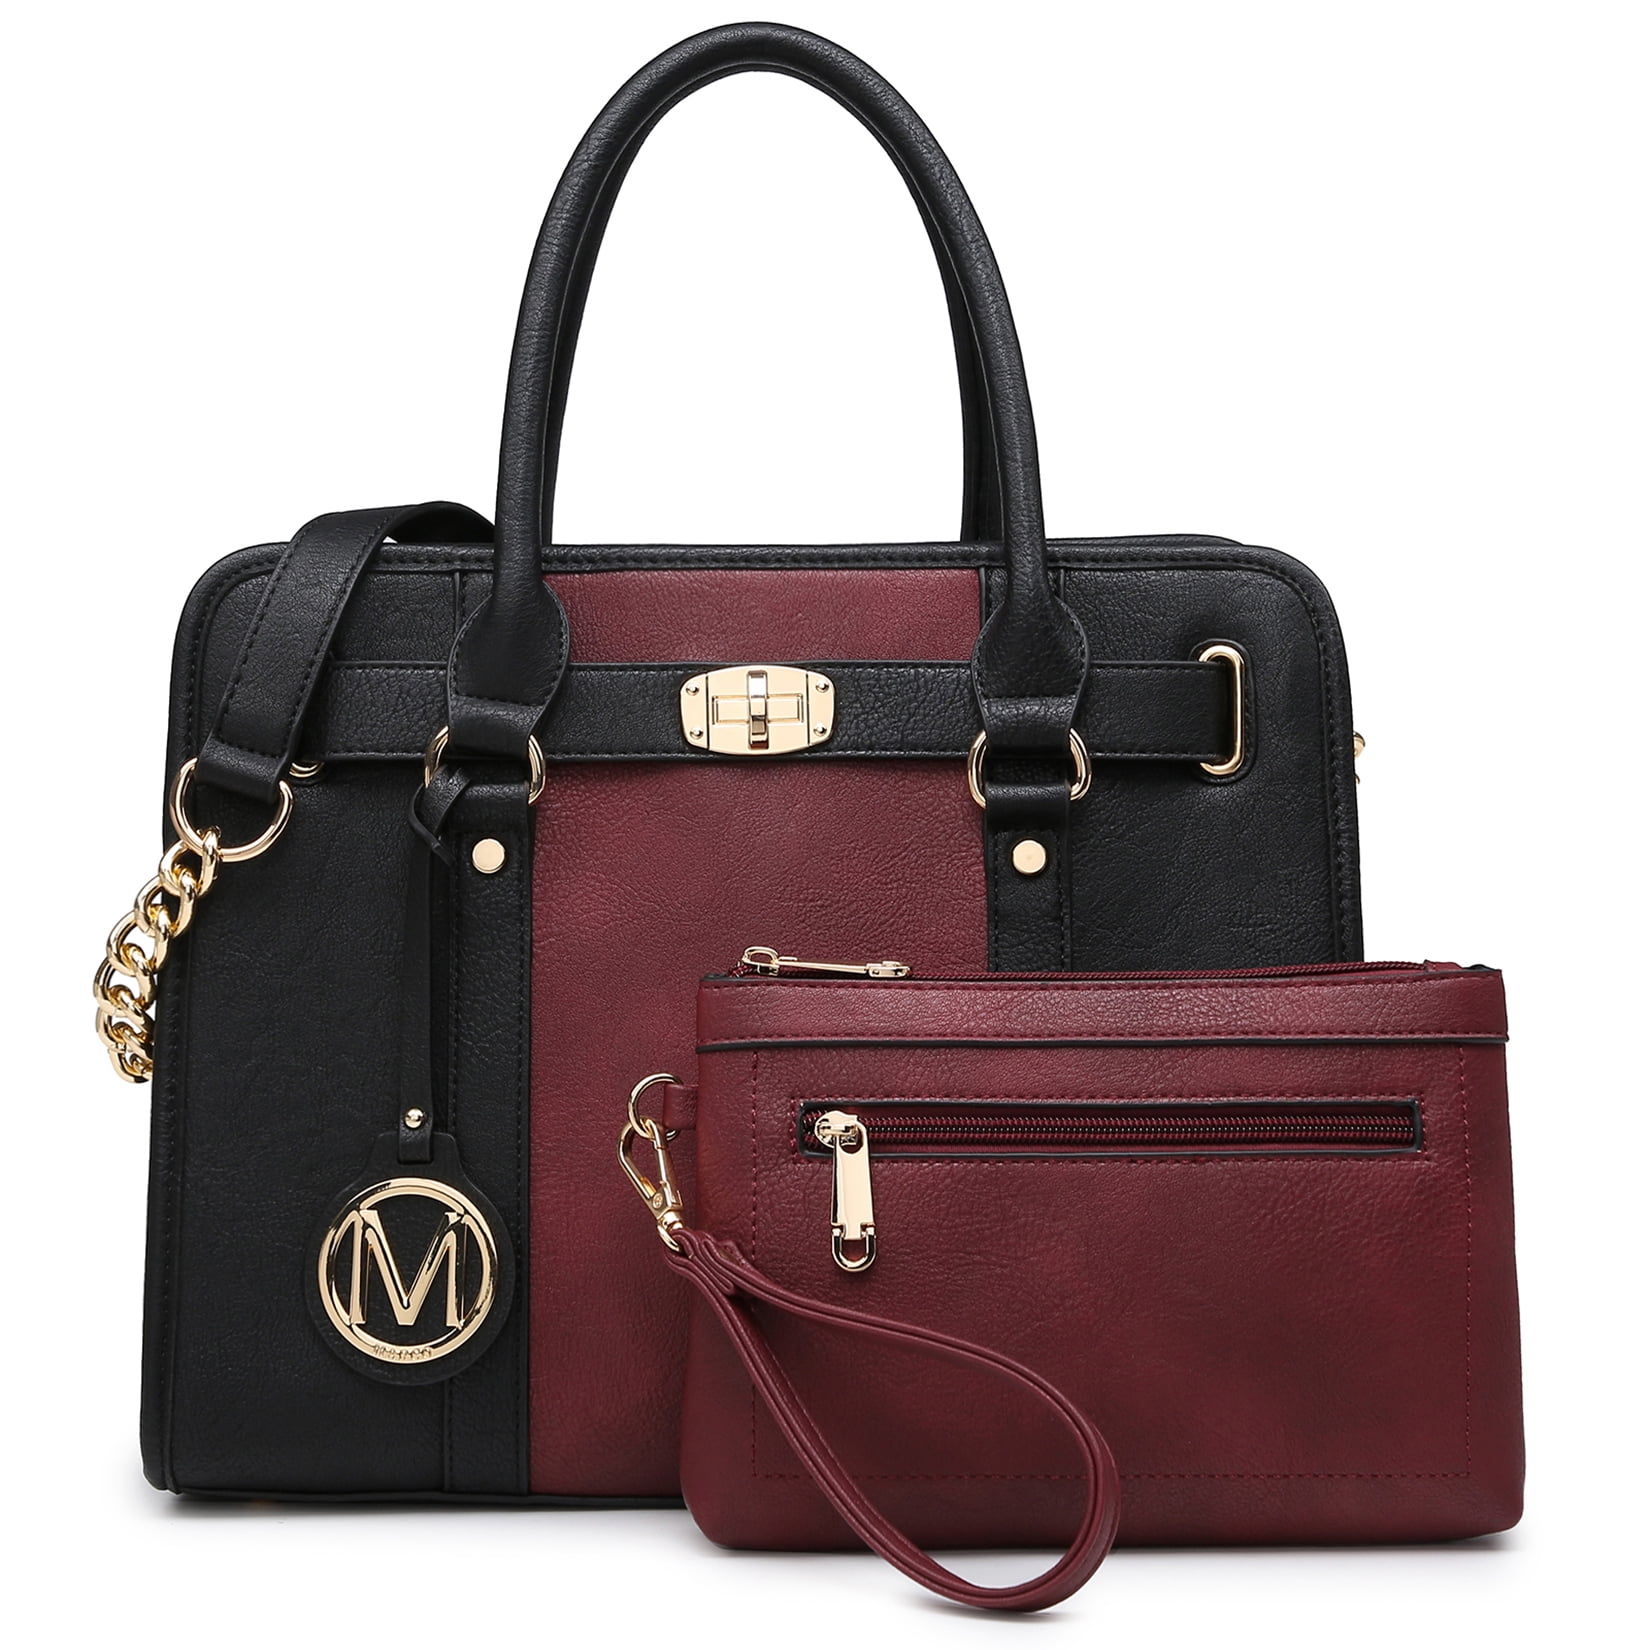 MKP Womens Satchel Female Handbags Two Tone Vegan Leather Shoulder Bag ...